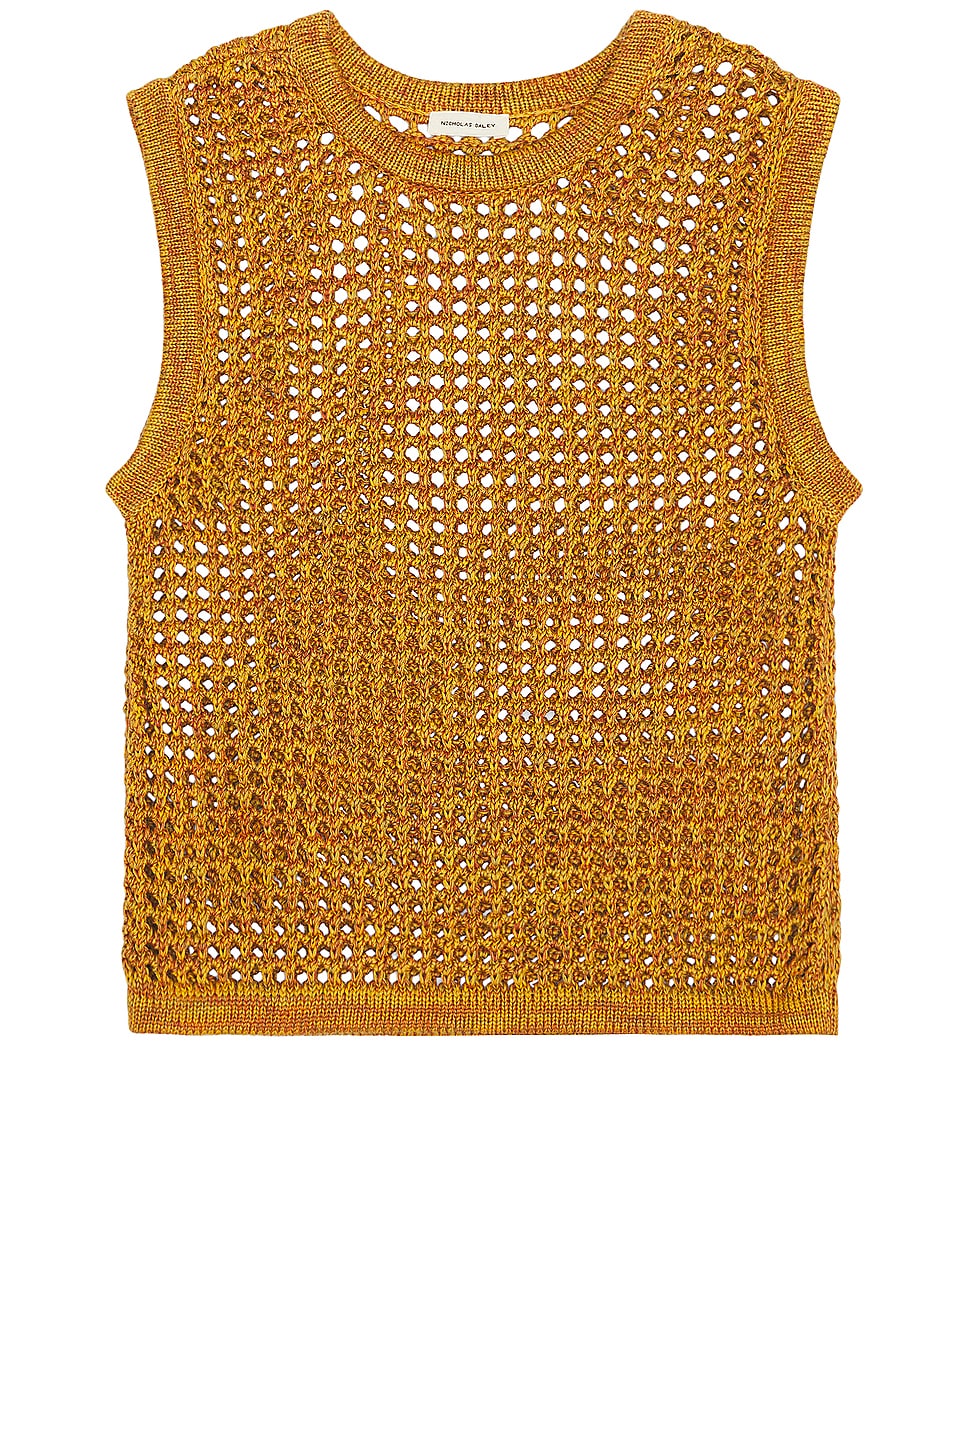 Image 1 of Nicholas Daley Crochet Vest in Orange Mustard